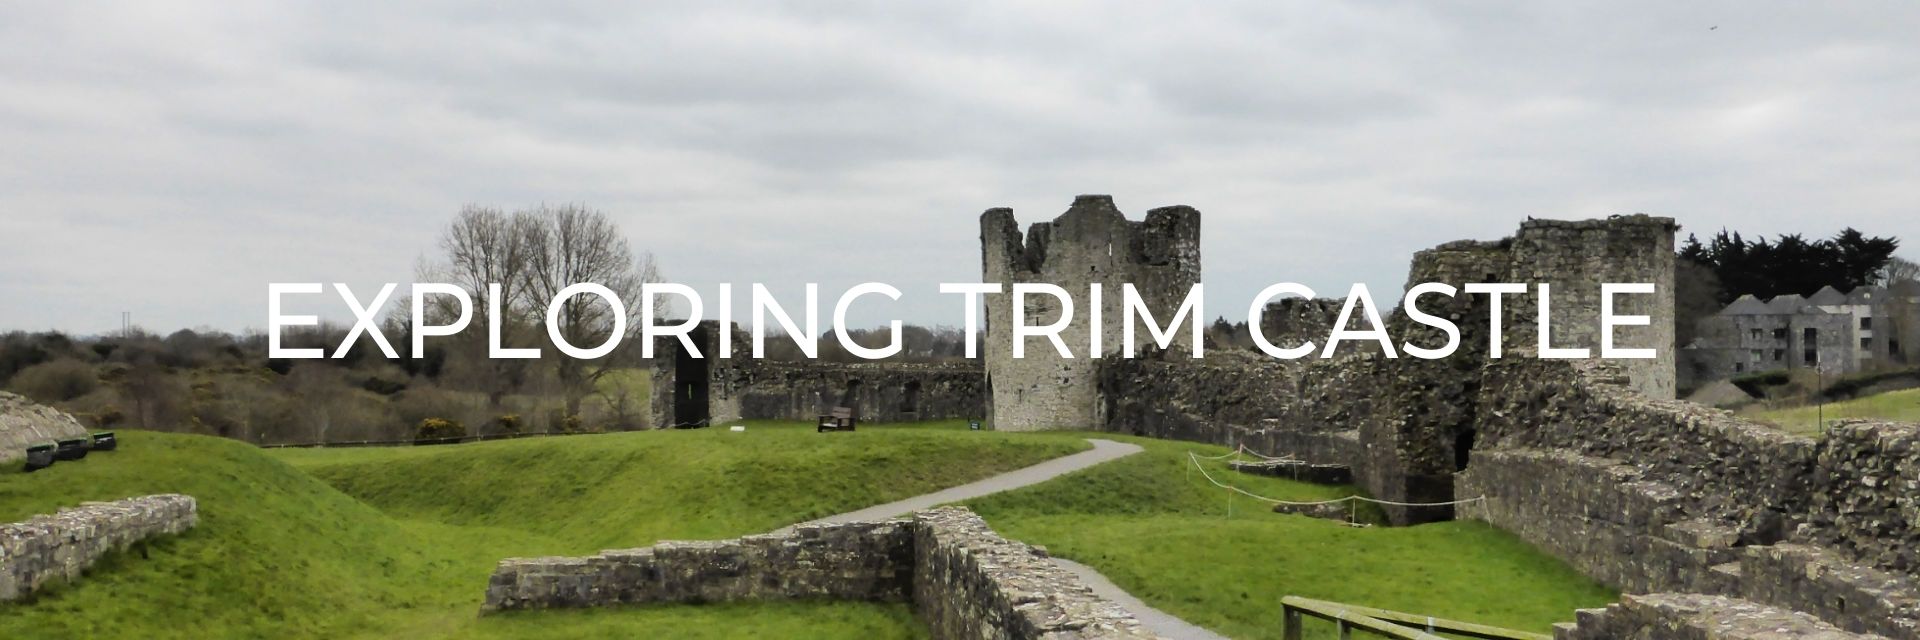 Exploring Trim Castle Desktop Header